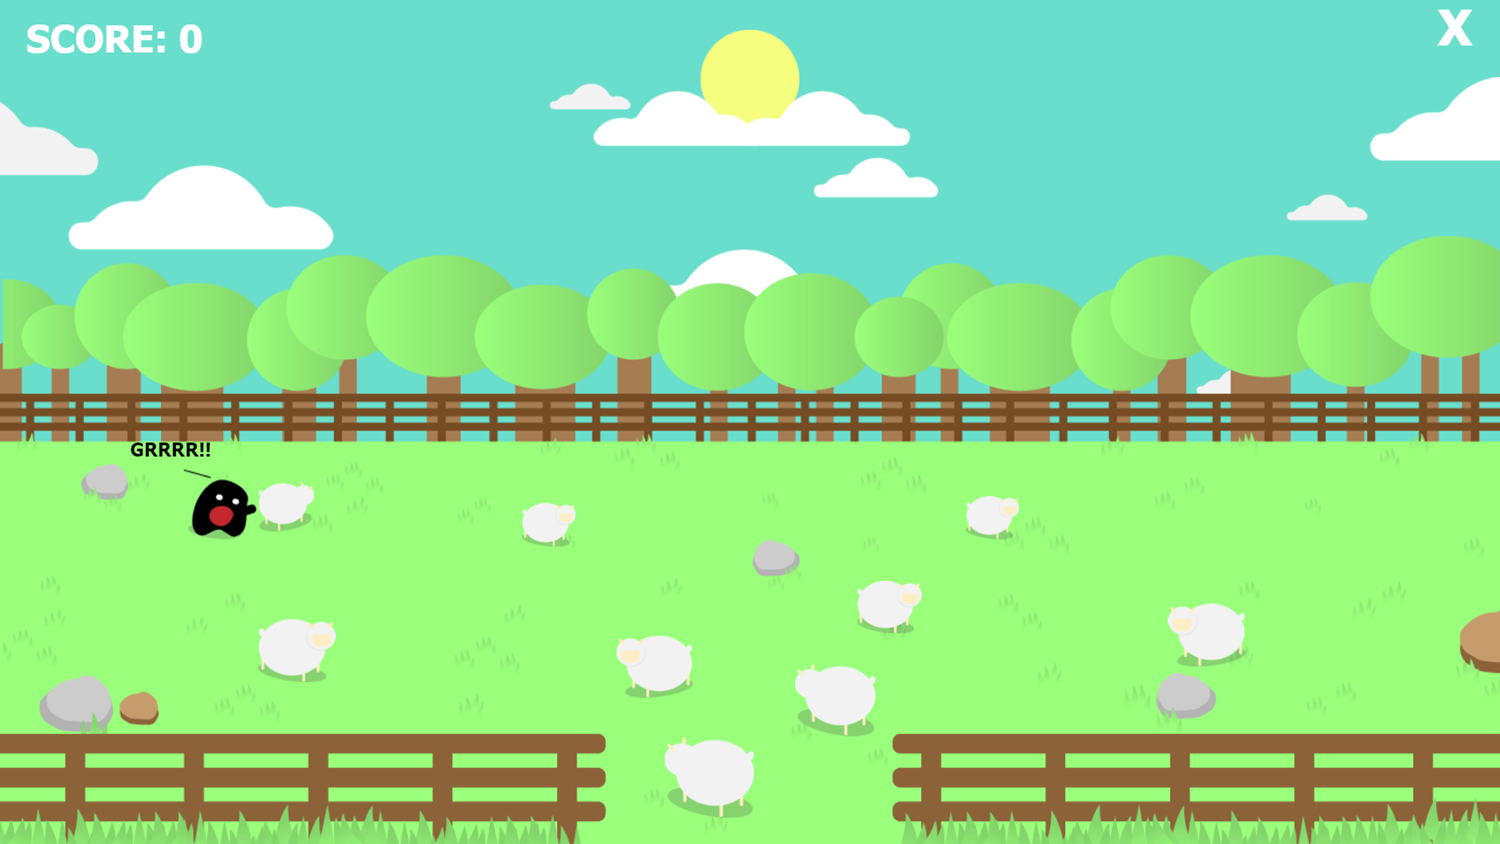 Save the Sheep Game Start Screenshot.